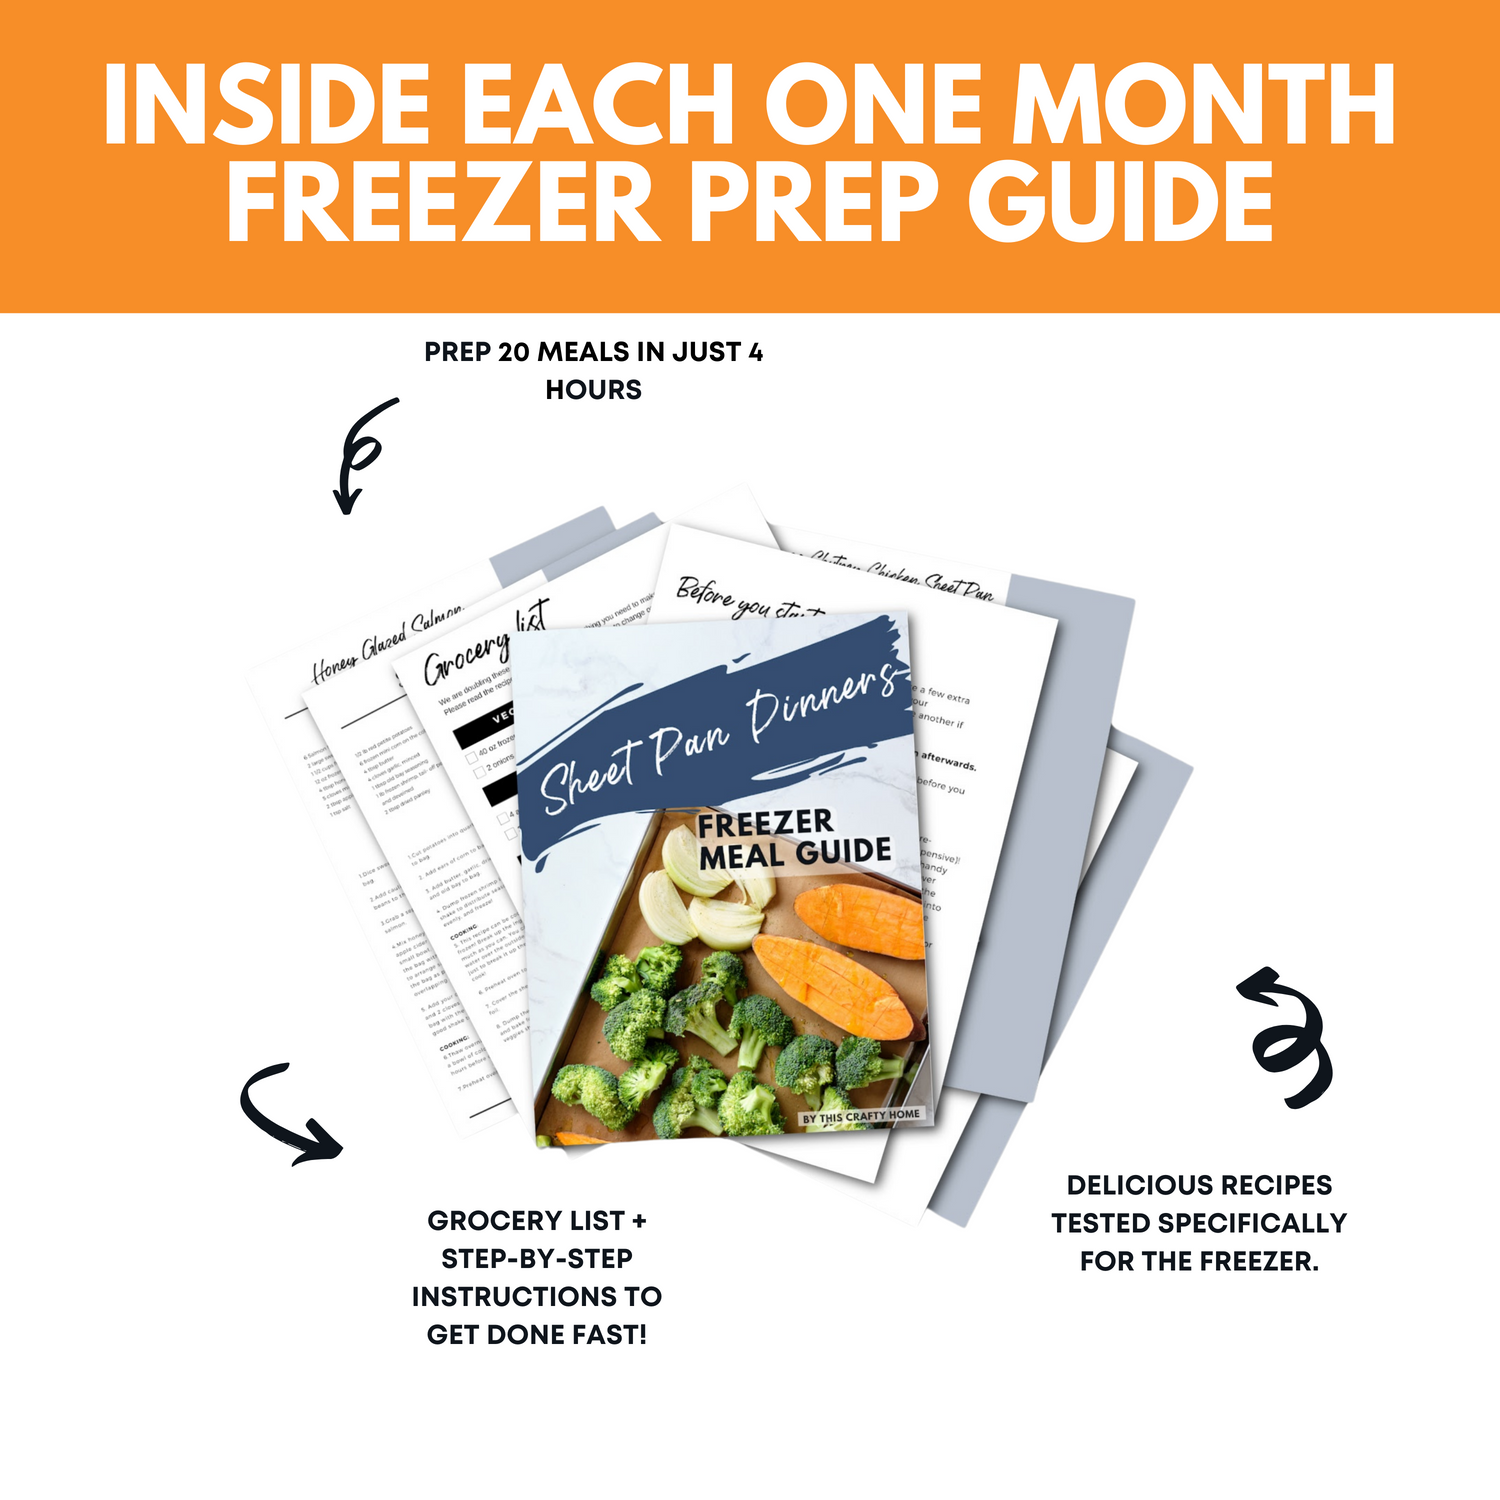 Sheet Pan Dinners Freezer Meal Guide